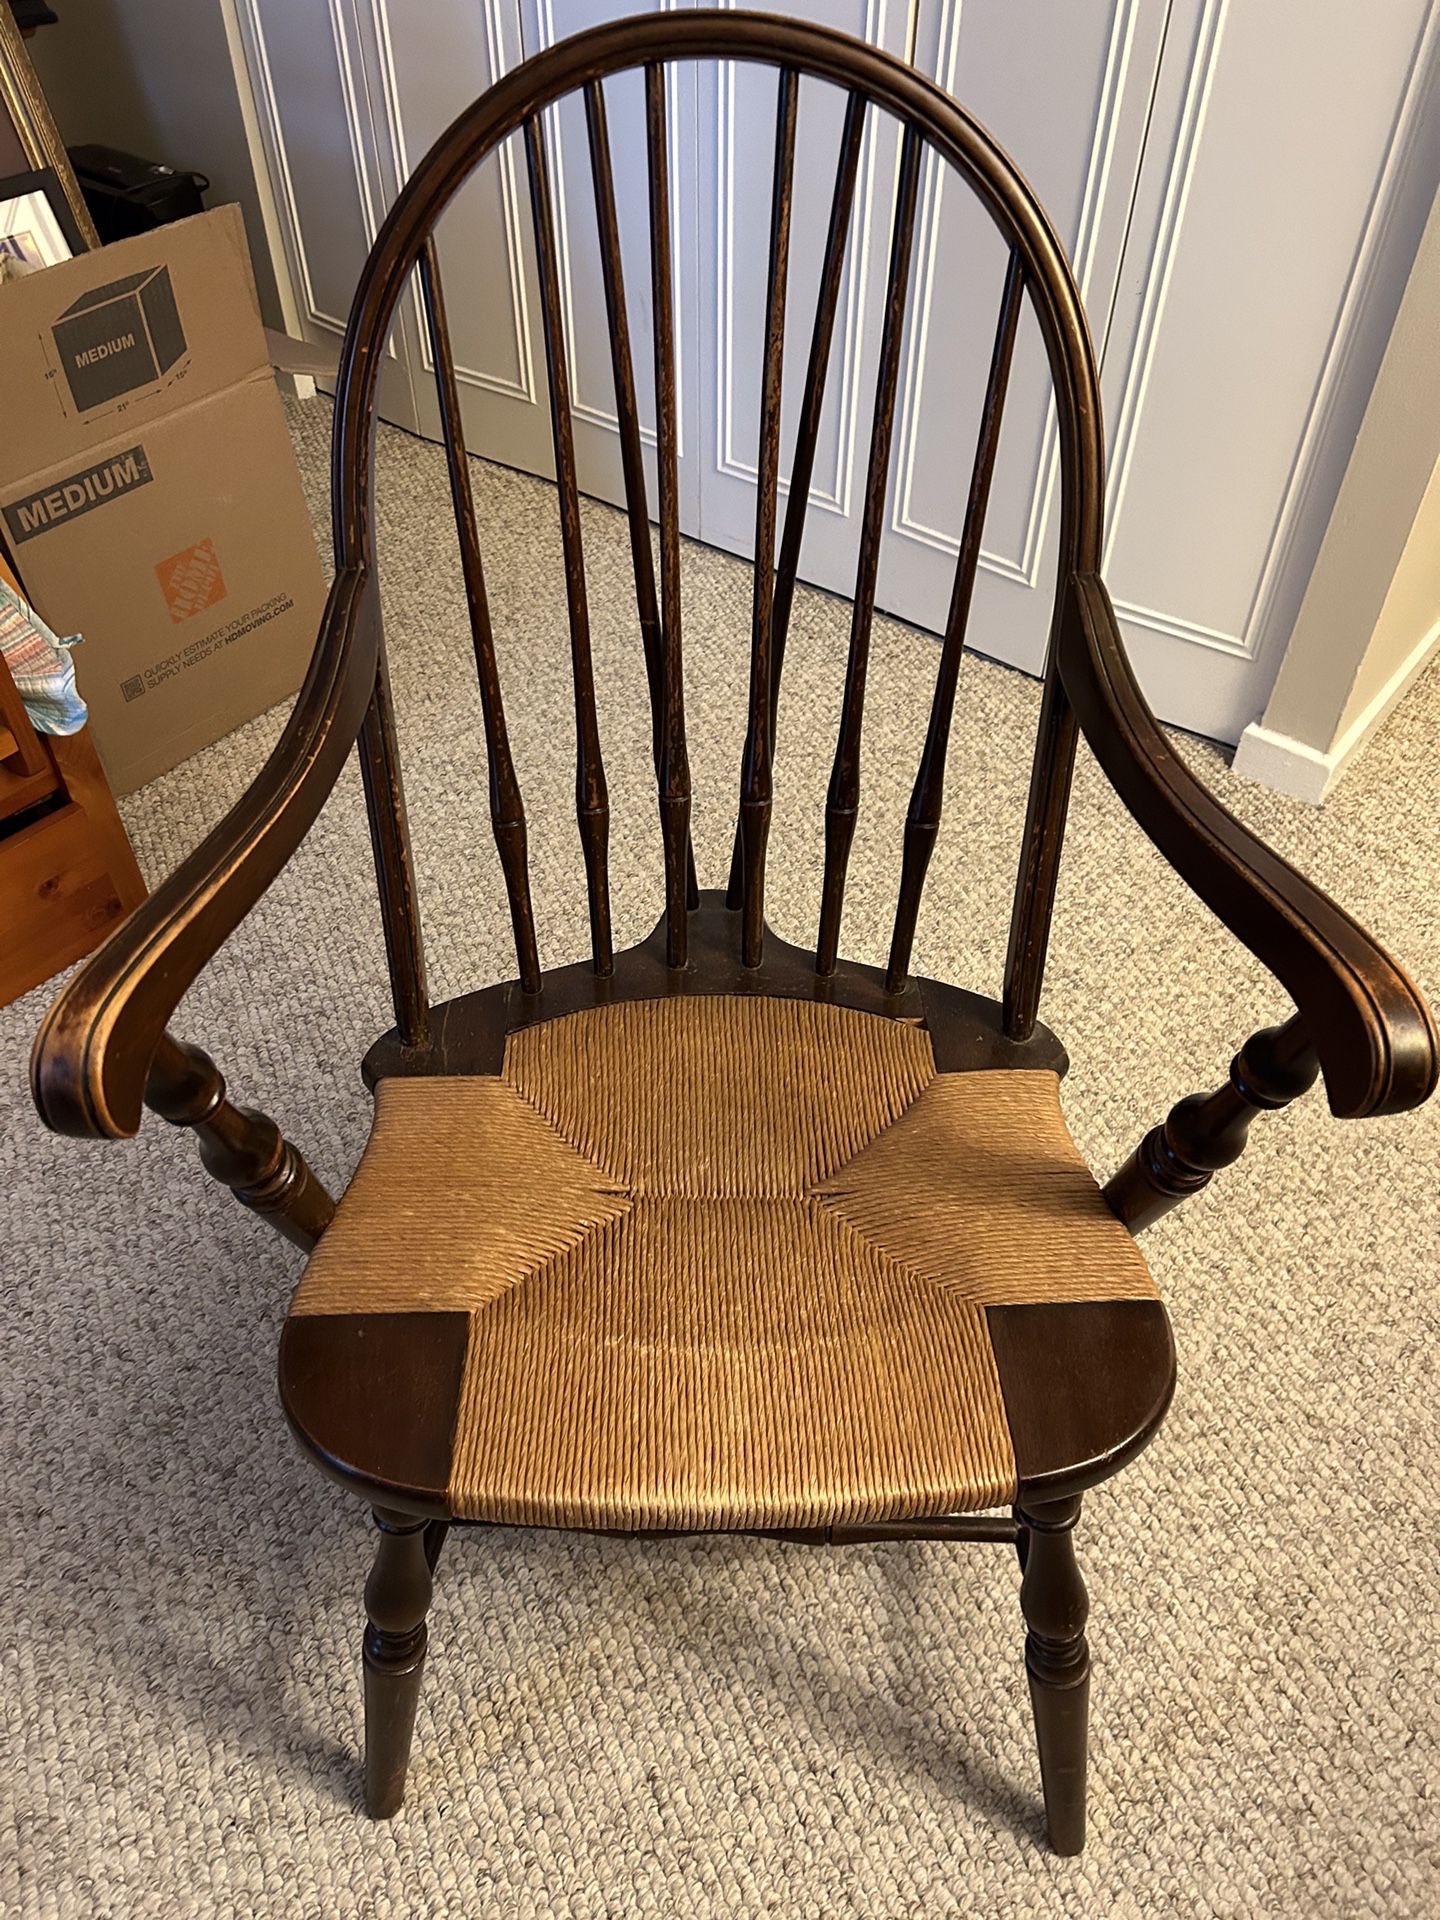 Antique Oak Side Chair